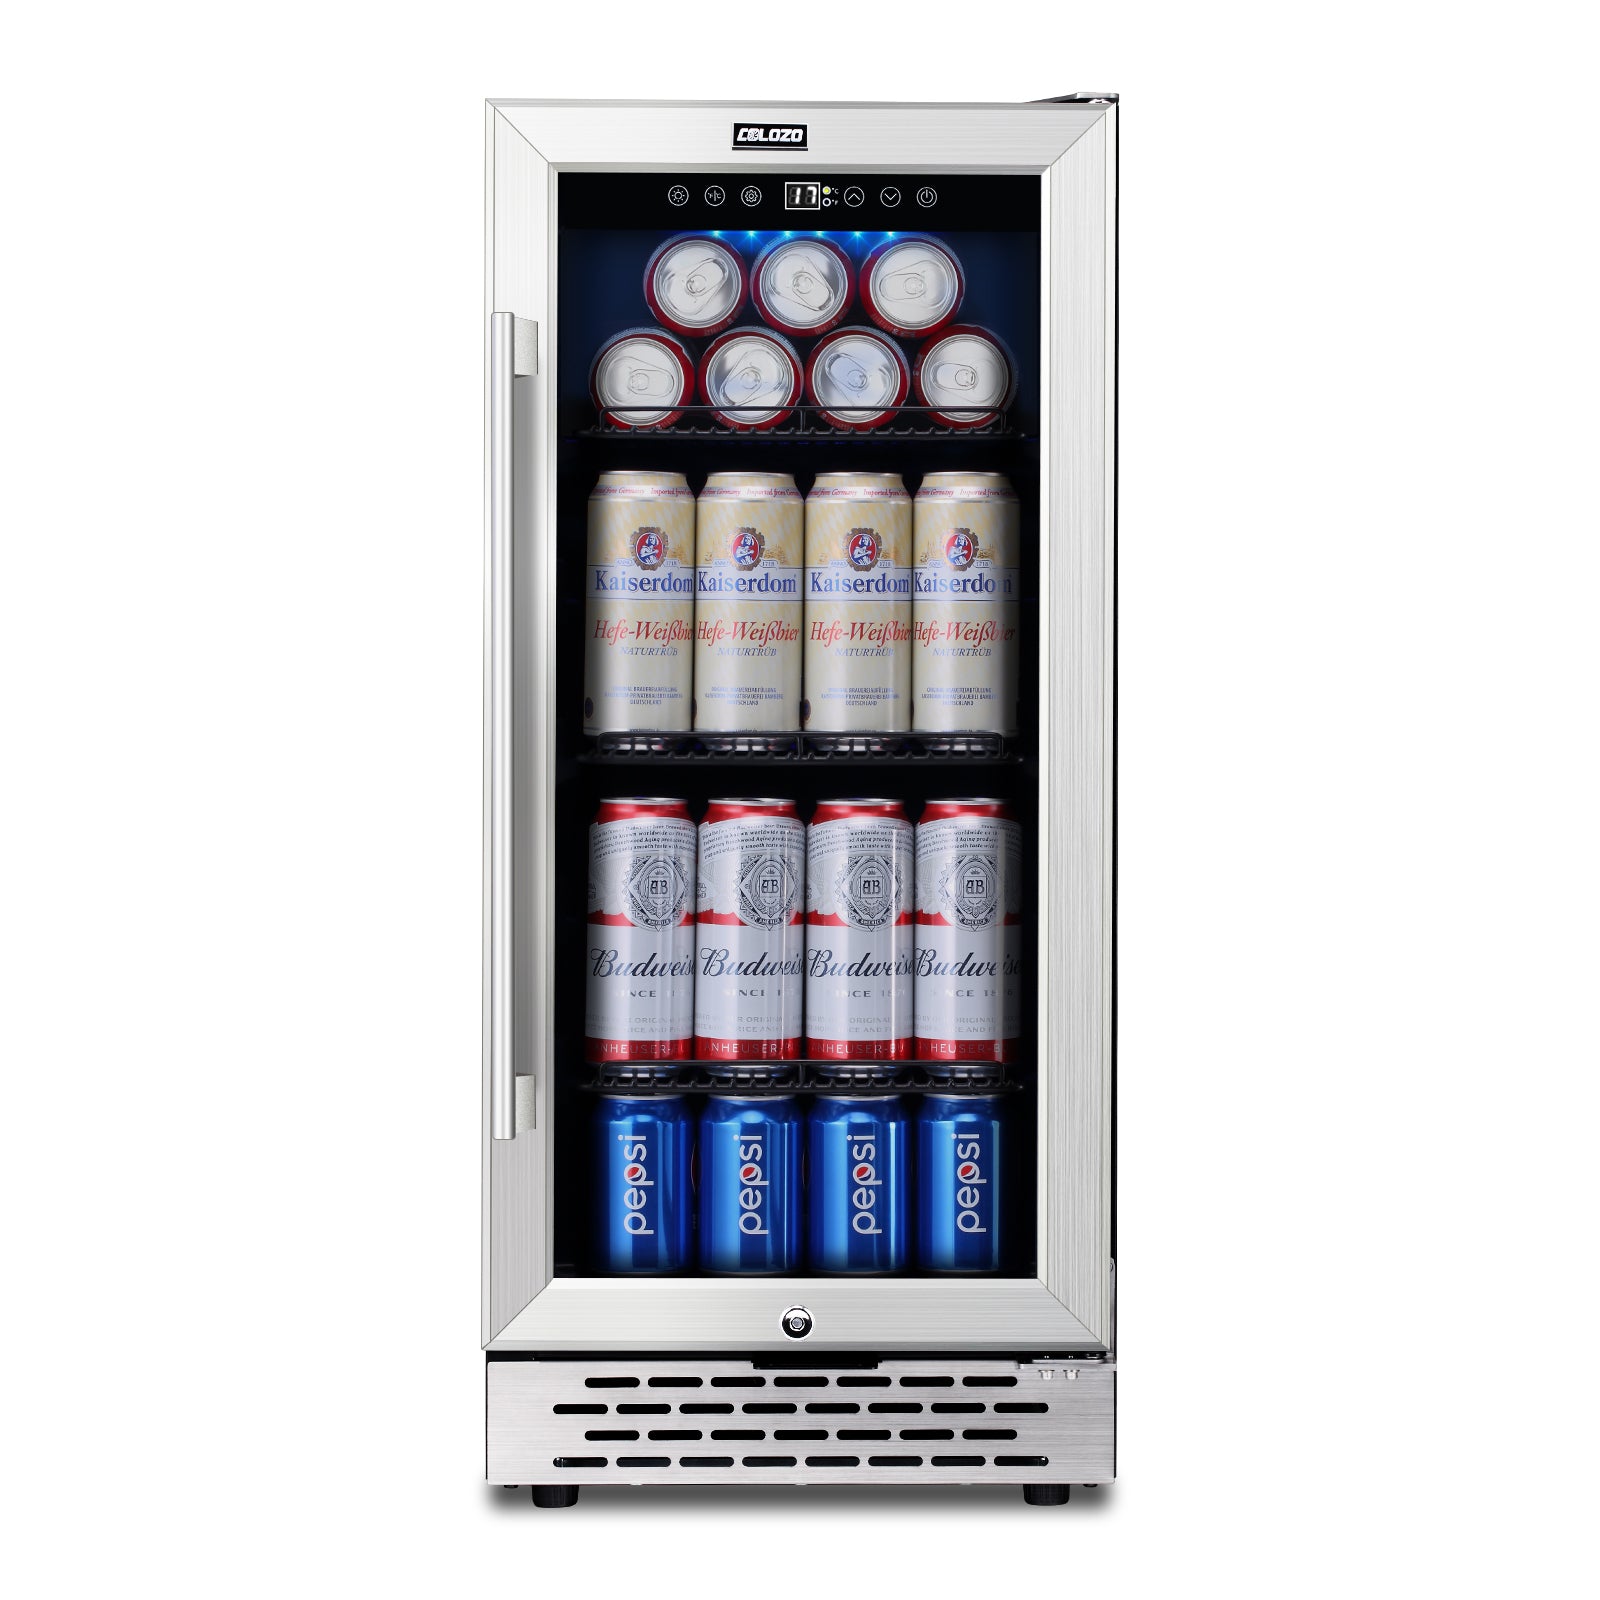 COLOZO 15 inch Beverage Refrigerator with Glass Door 180 Cans Mini Beverage Cooler Under Counter Frestanding Built in Center Garage Fridge with Lock for Drink Beer Soda Wine Water